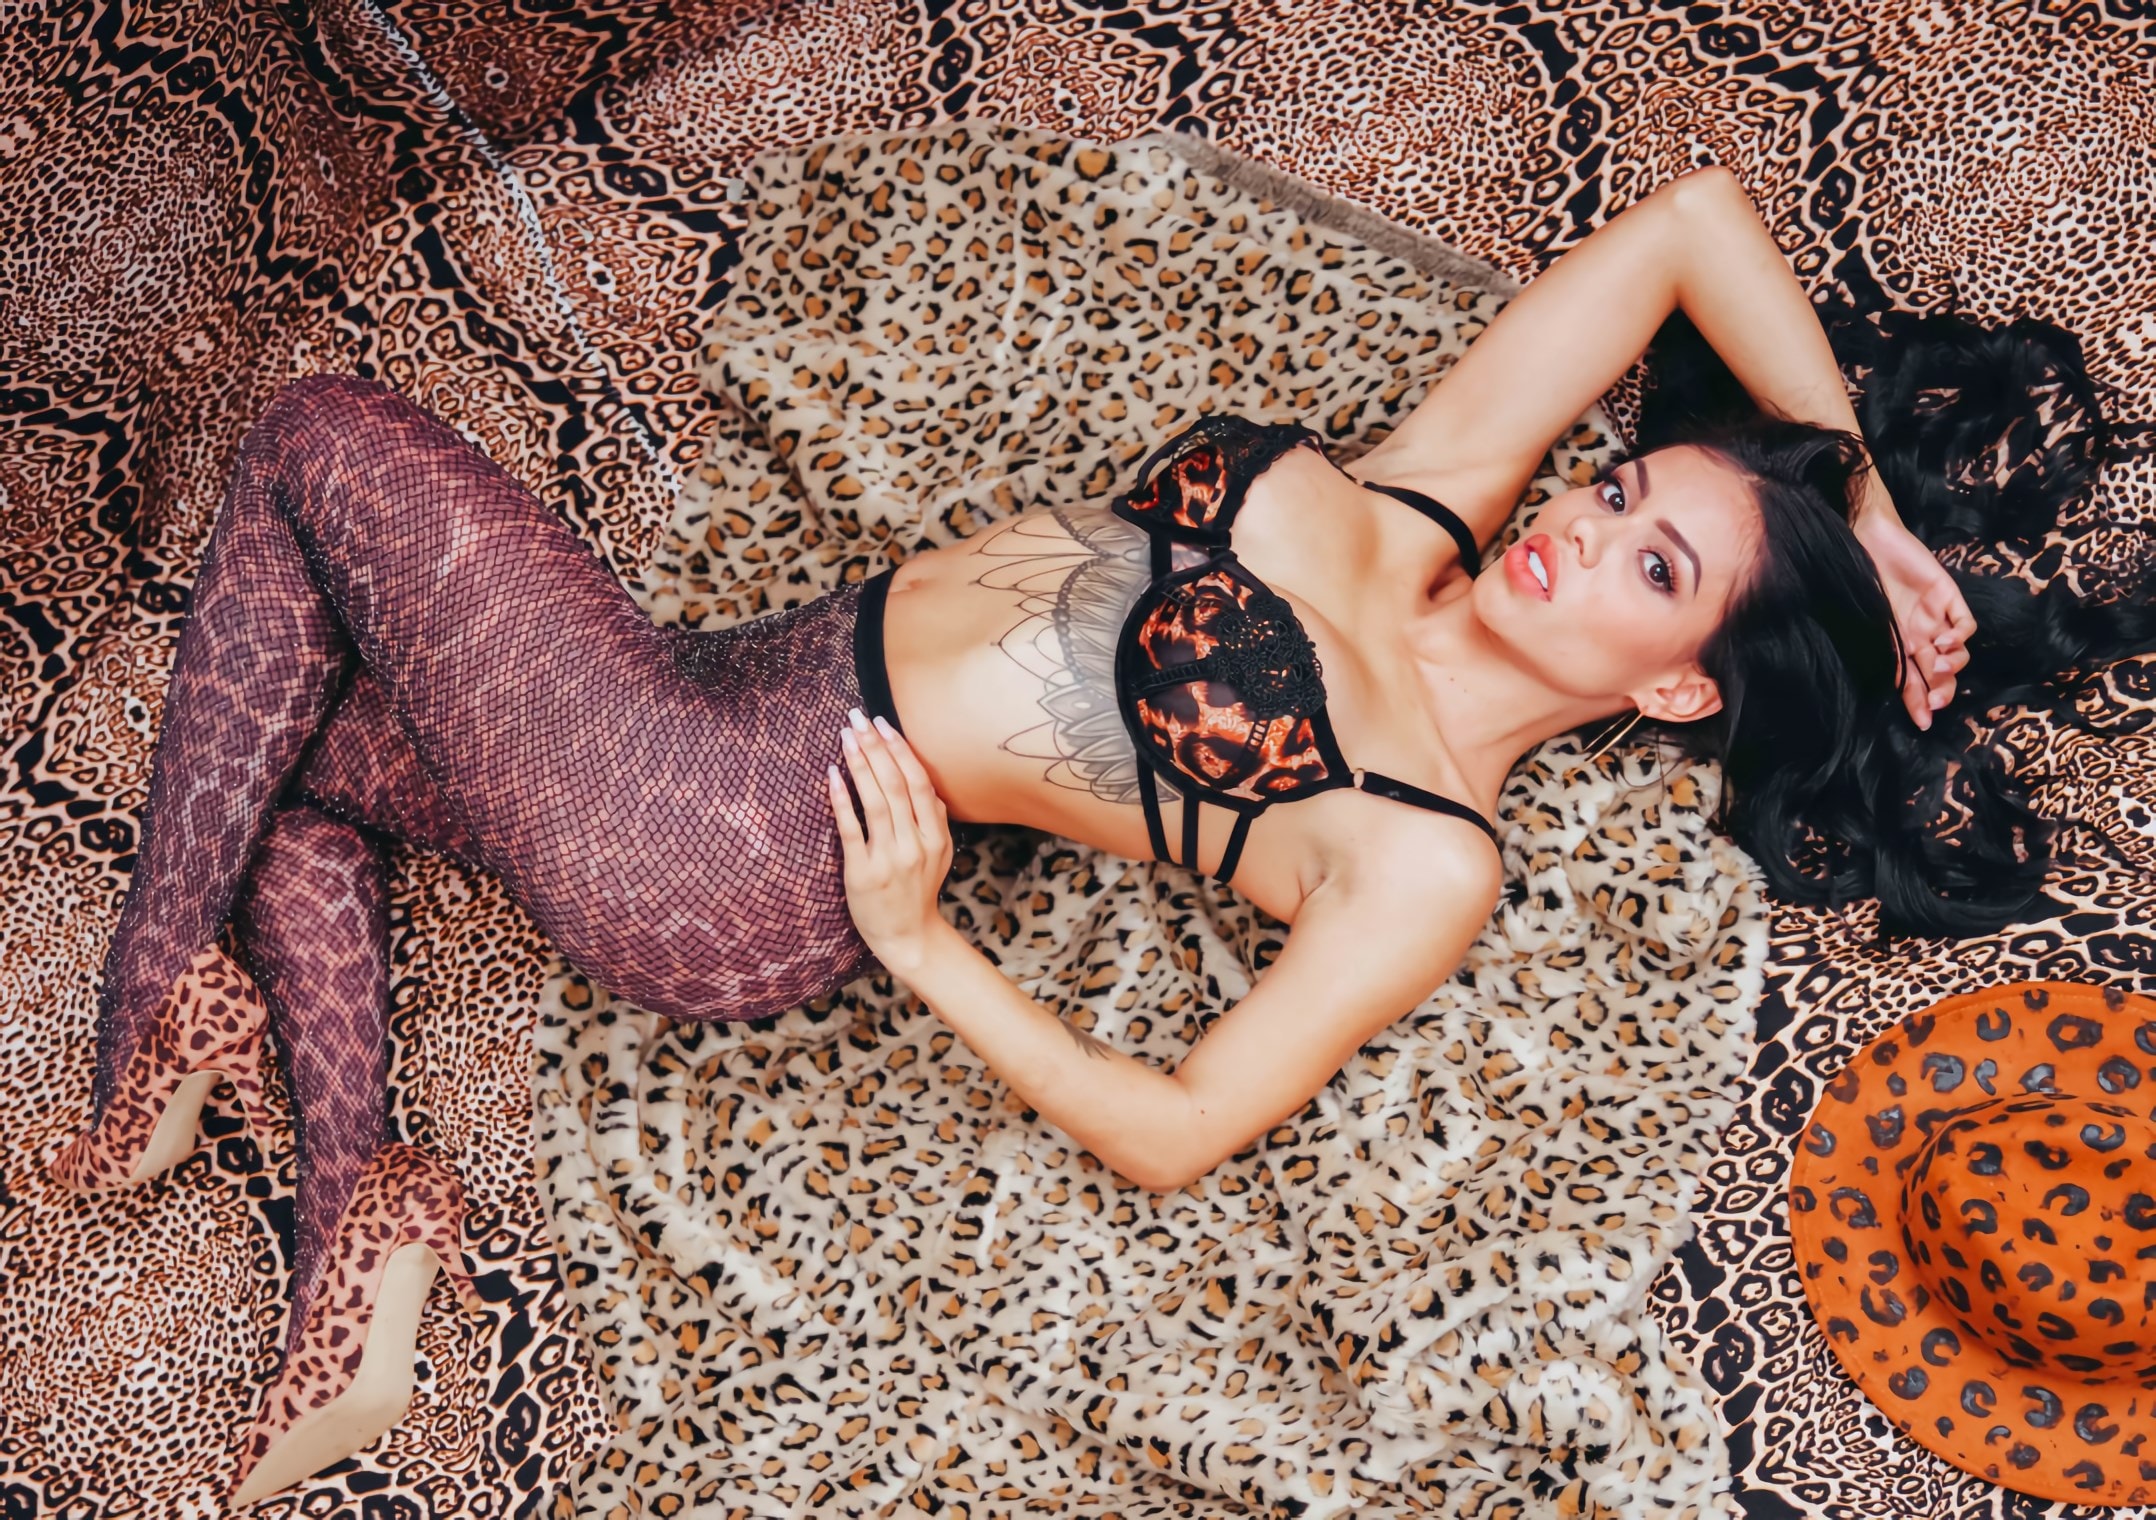 Spizoo 'Leopard Hottie Canela Skin Gratifying Anal Sex' starring Canela Skin (Photo 2)